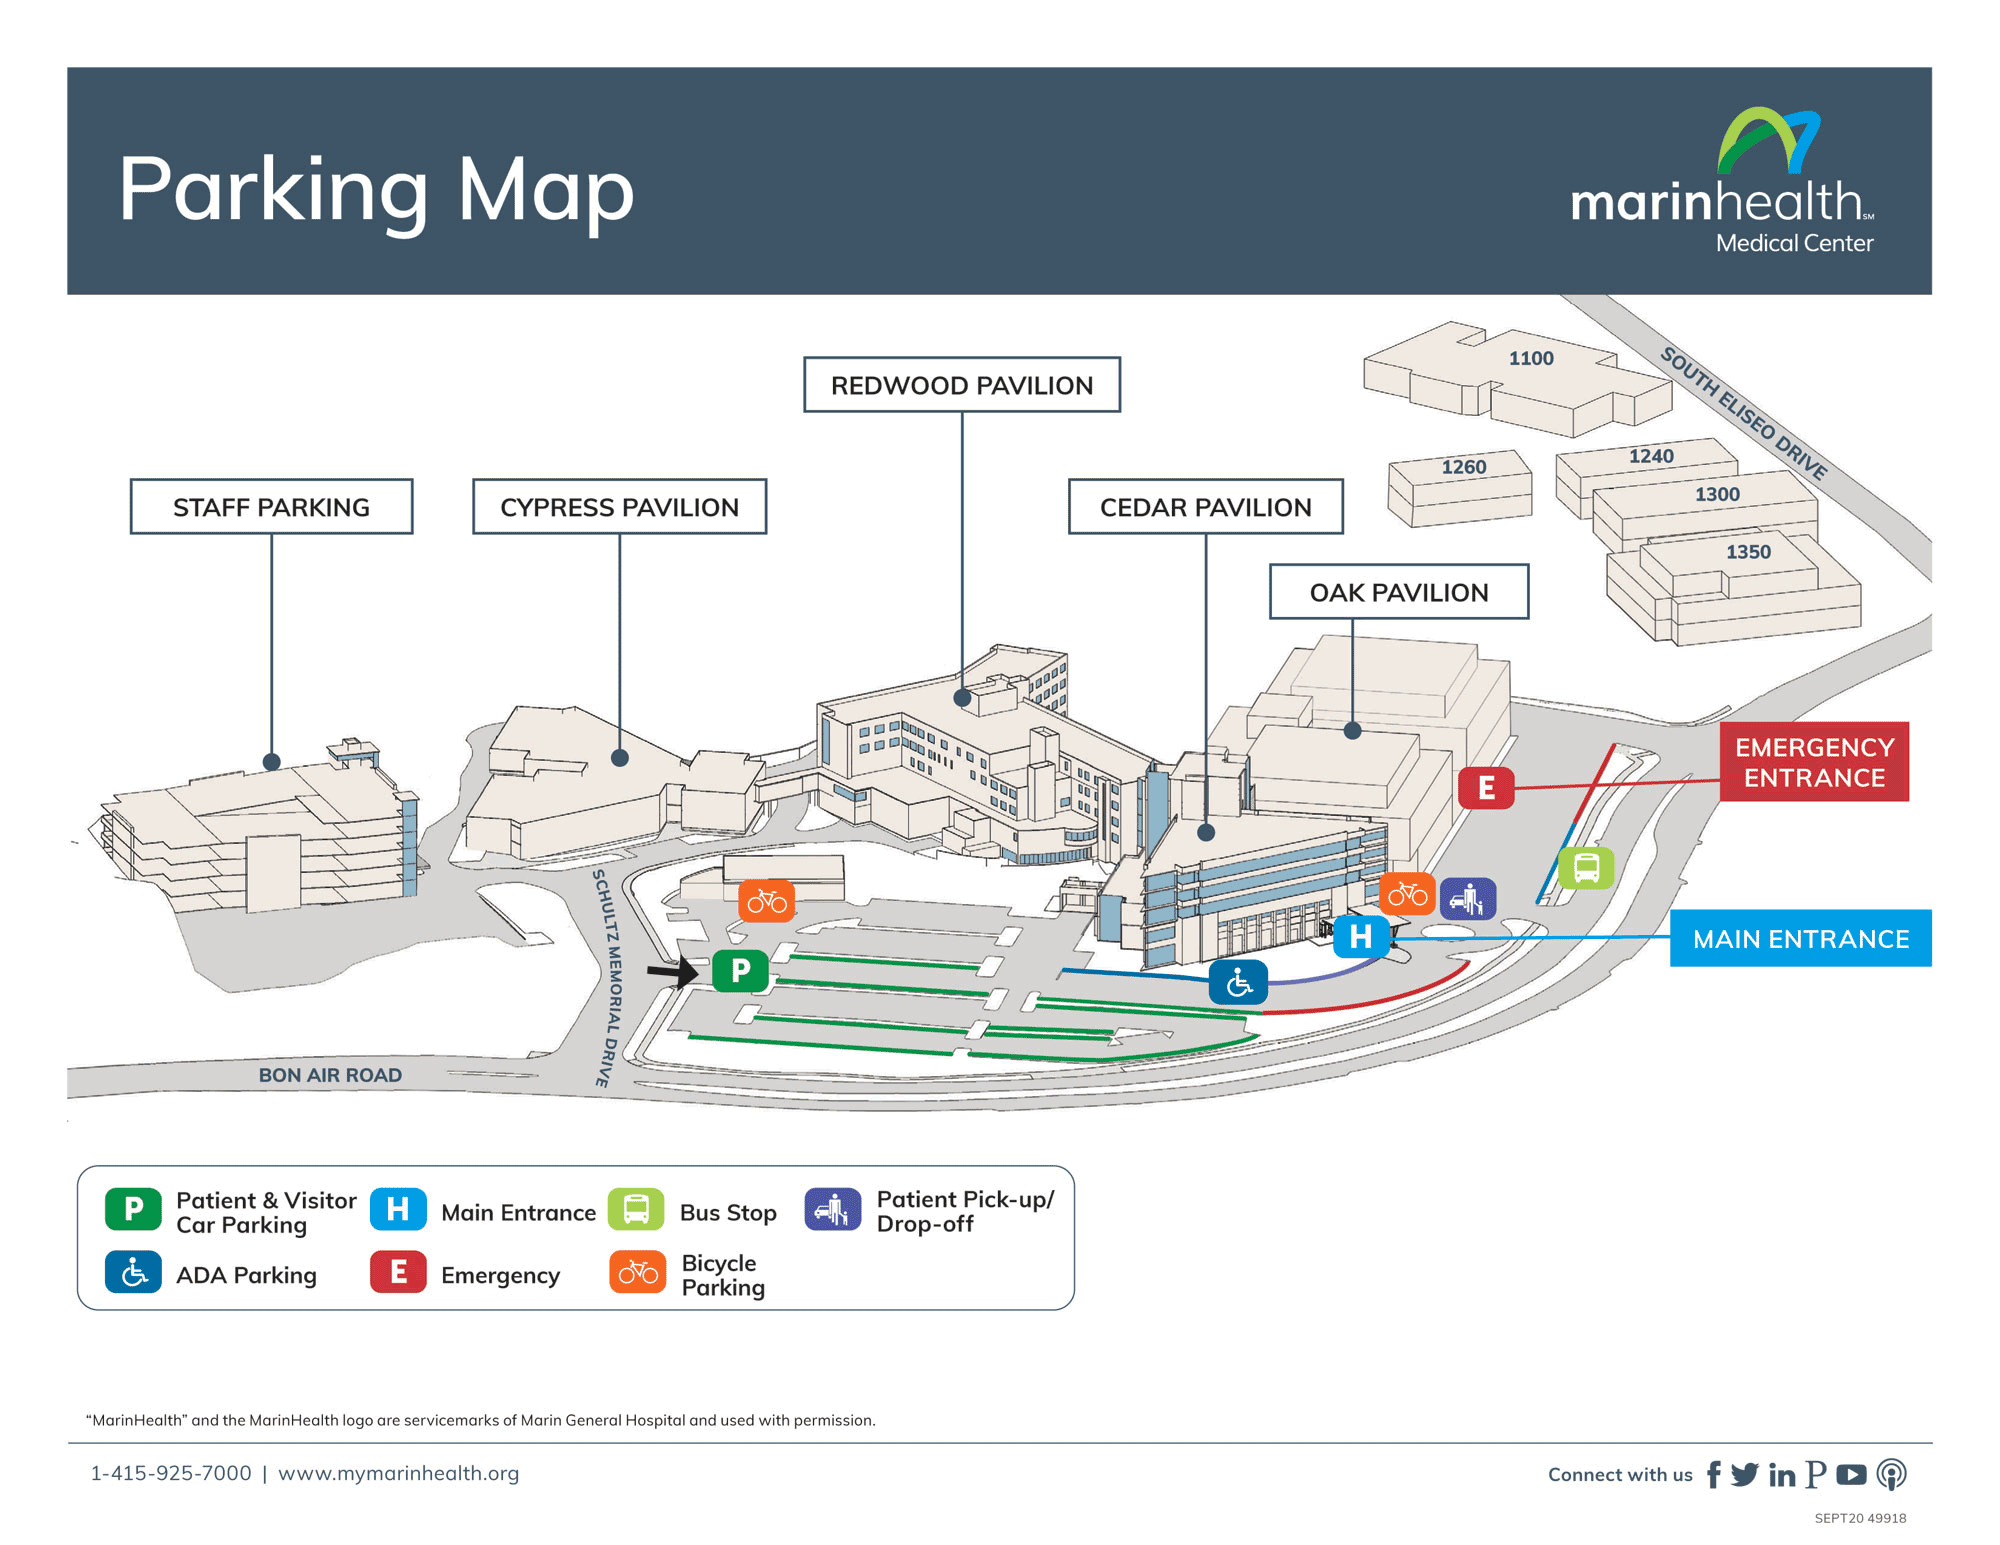 Parking Map for Oak Pavilion